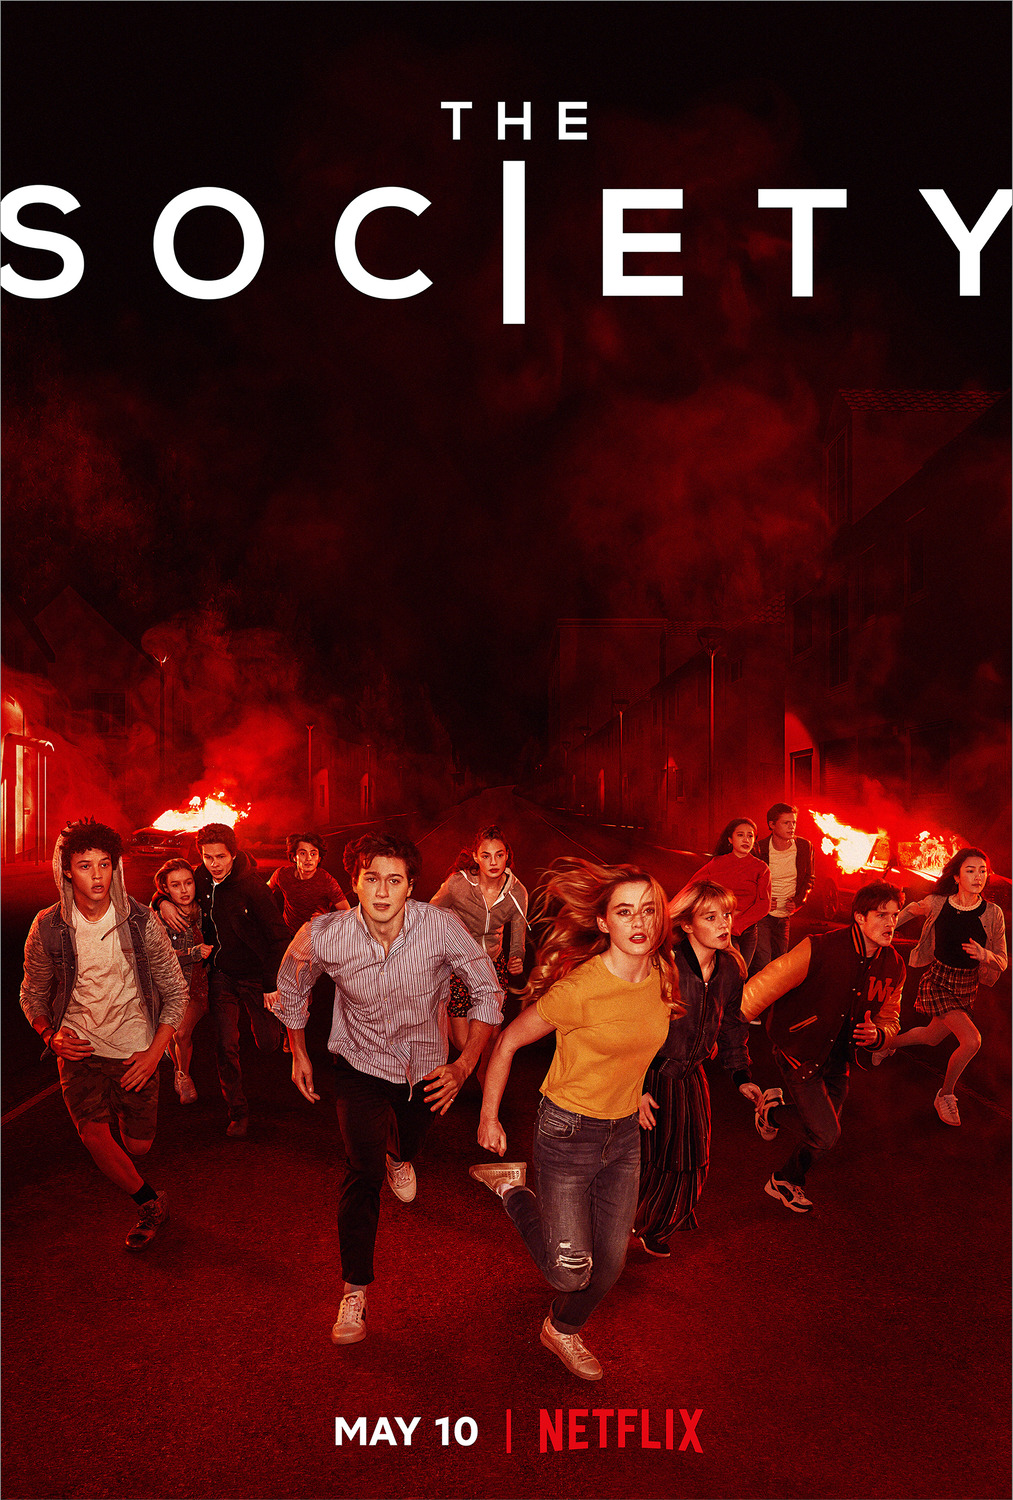 The Society Season 1 review: juicy teen sci-fi mystery